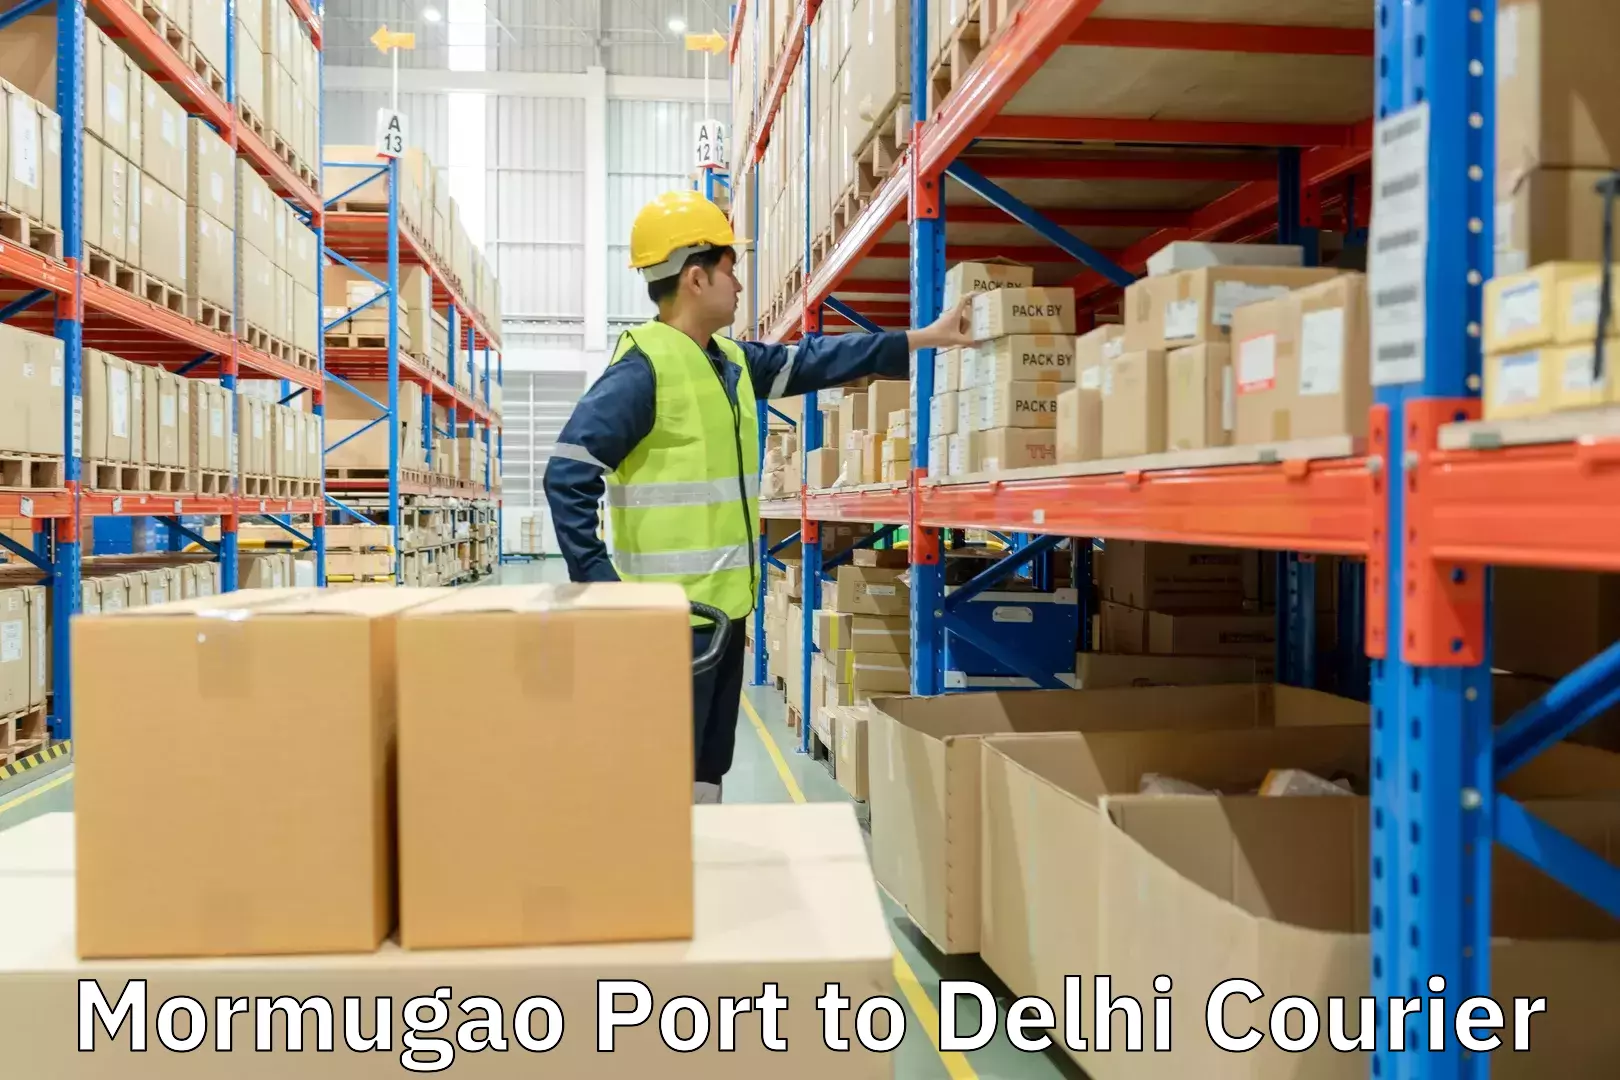 Express logistics service Mormugao Port to Delhi